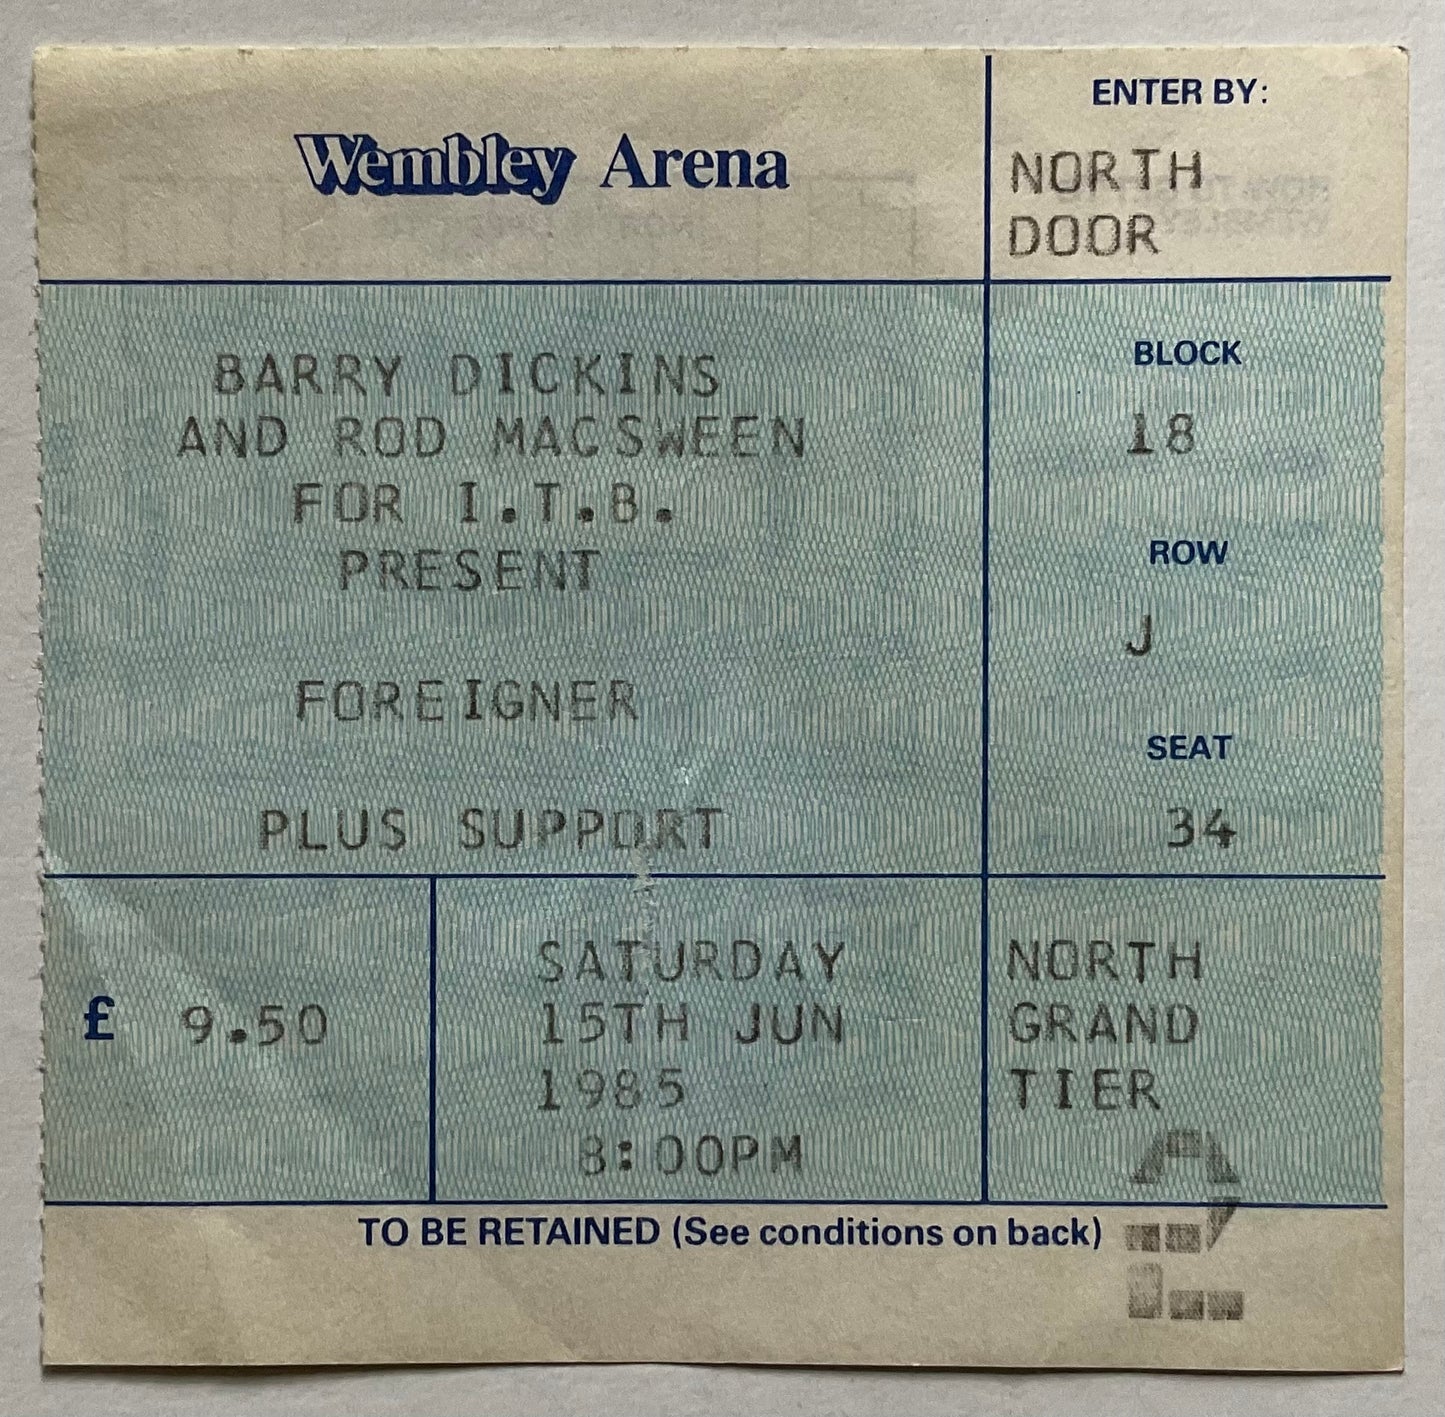 Foreigner Original Used Concert Ticket Wembley Arena London 15th June 1985